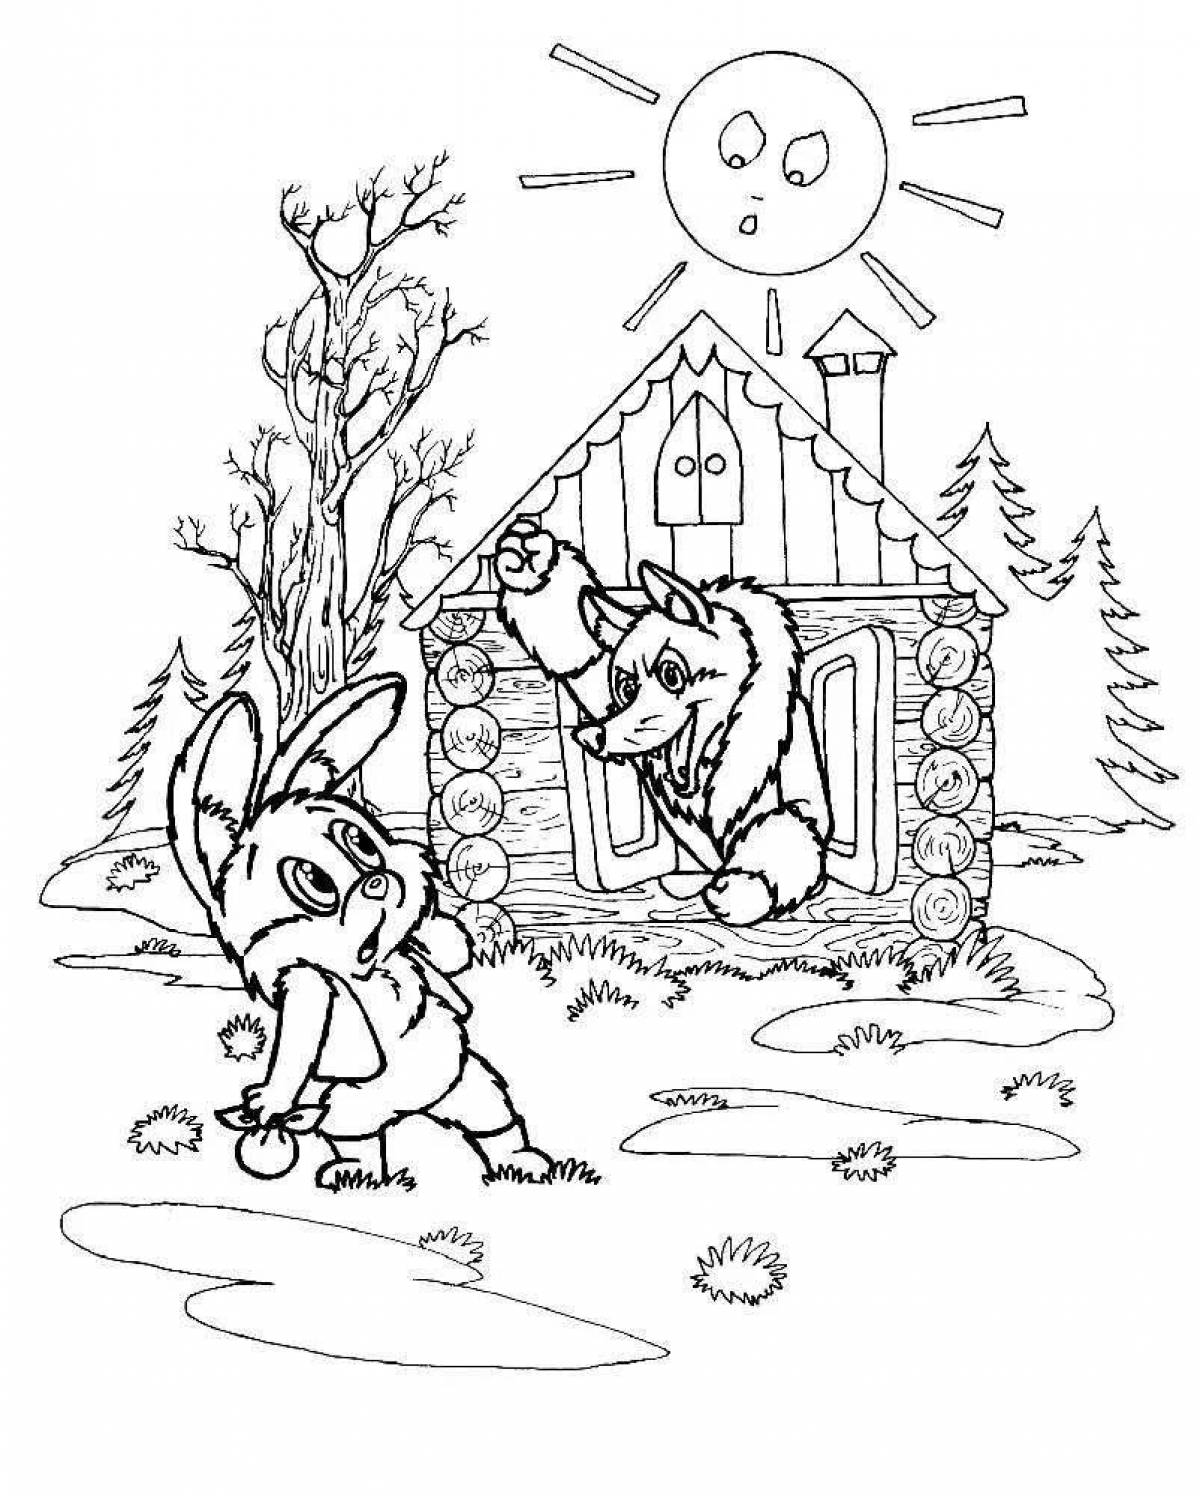 Rampant rabbit hut coloring page